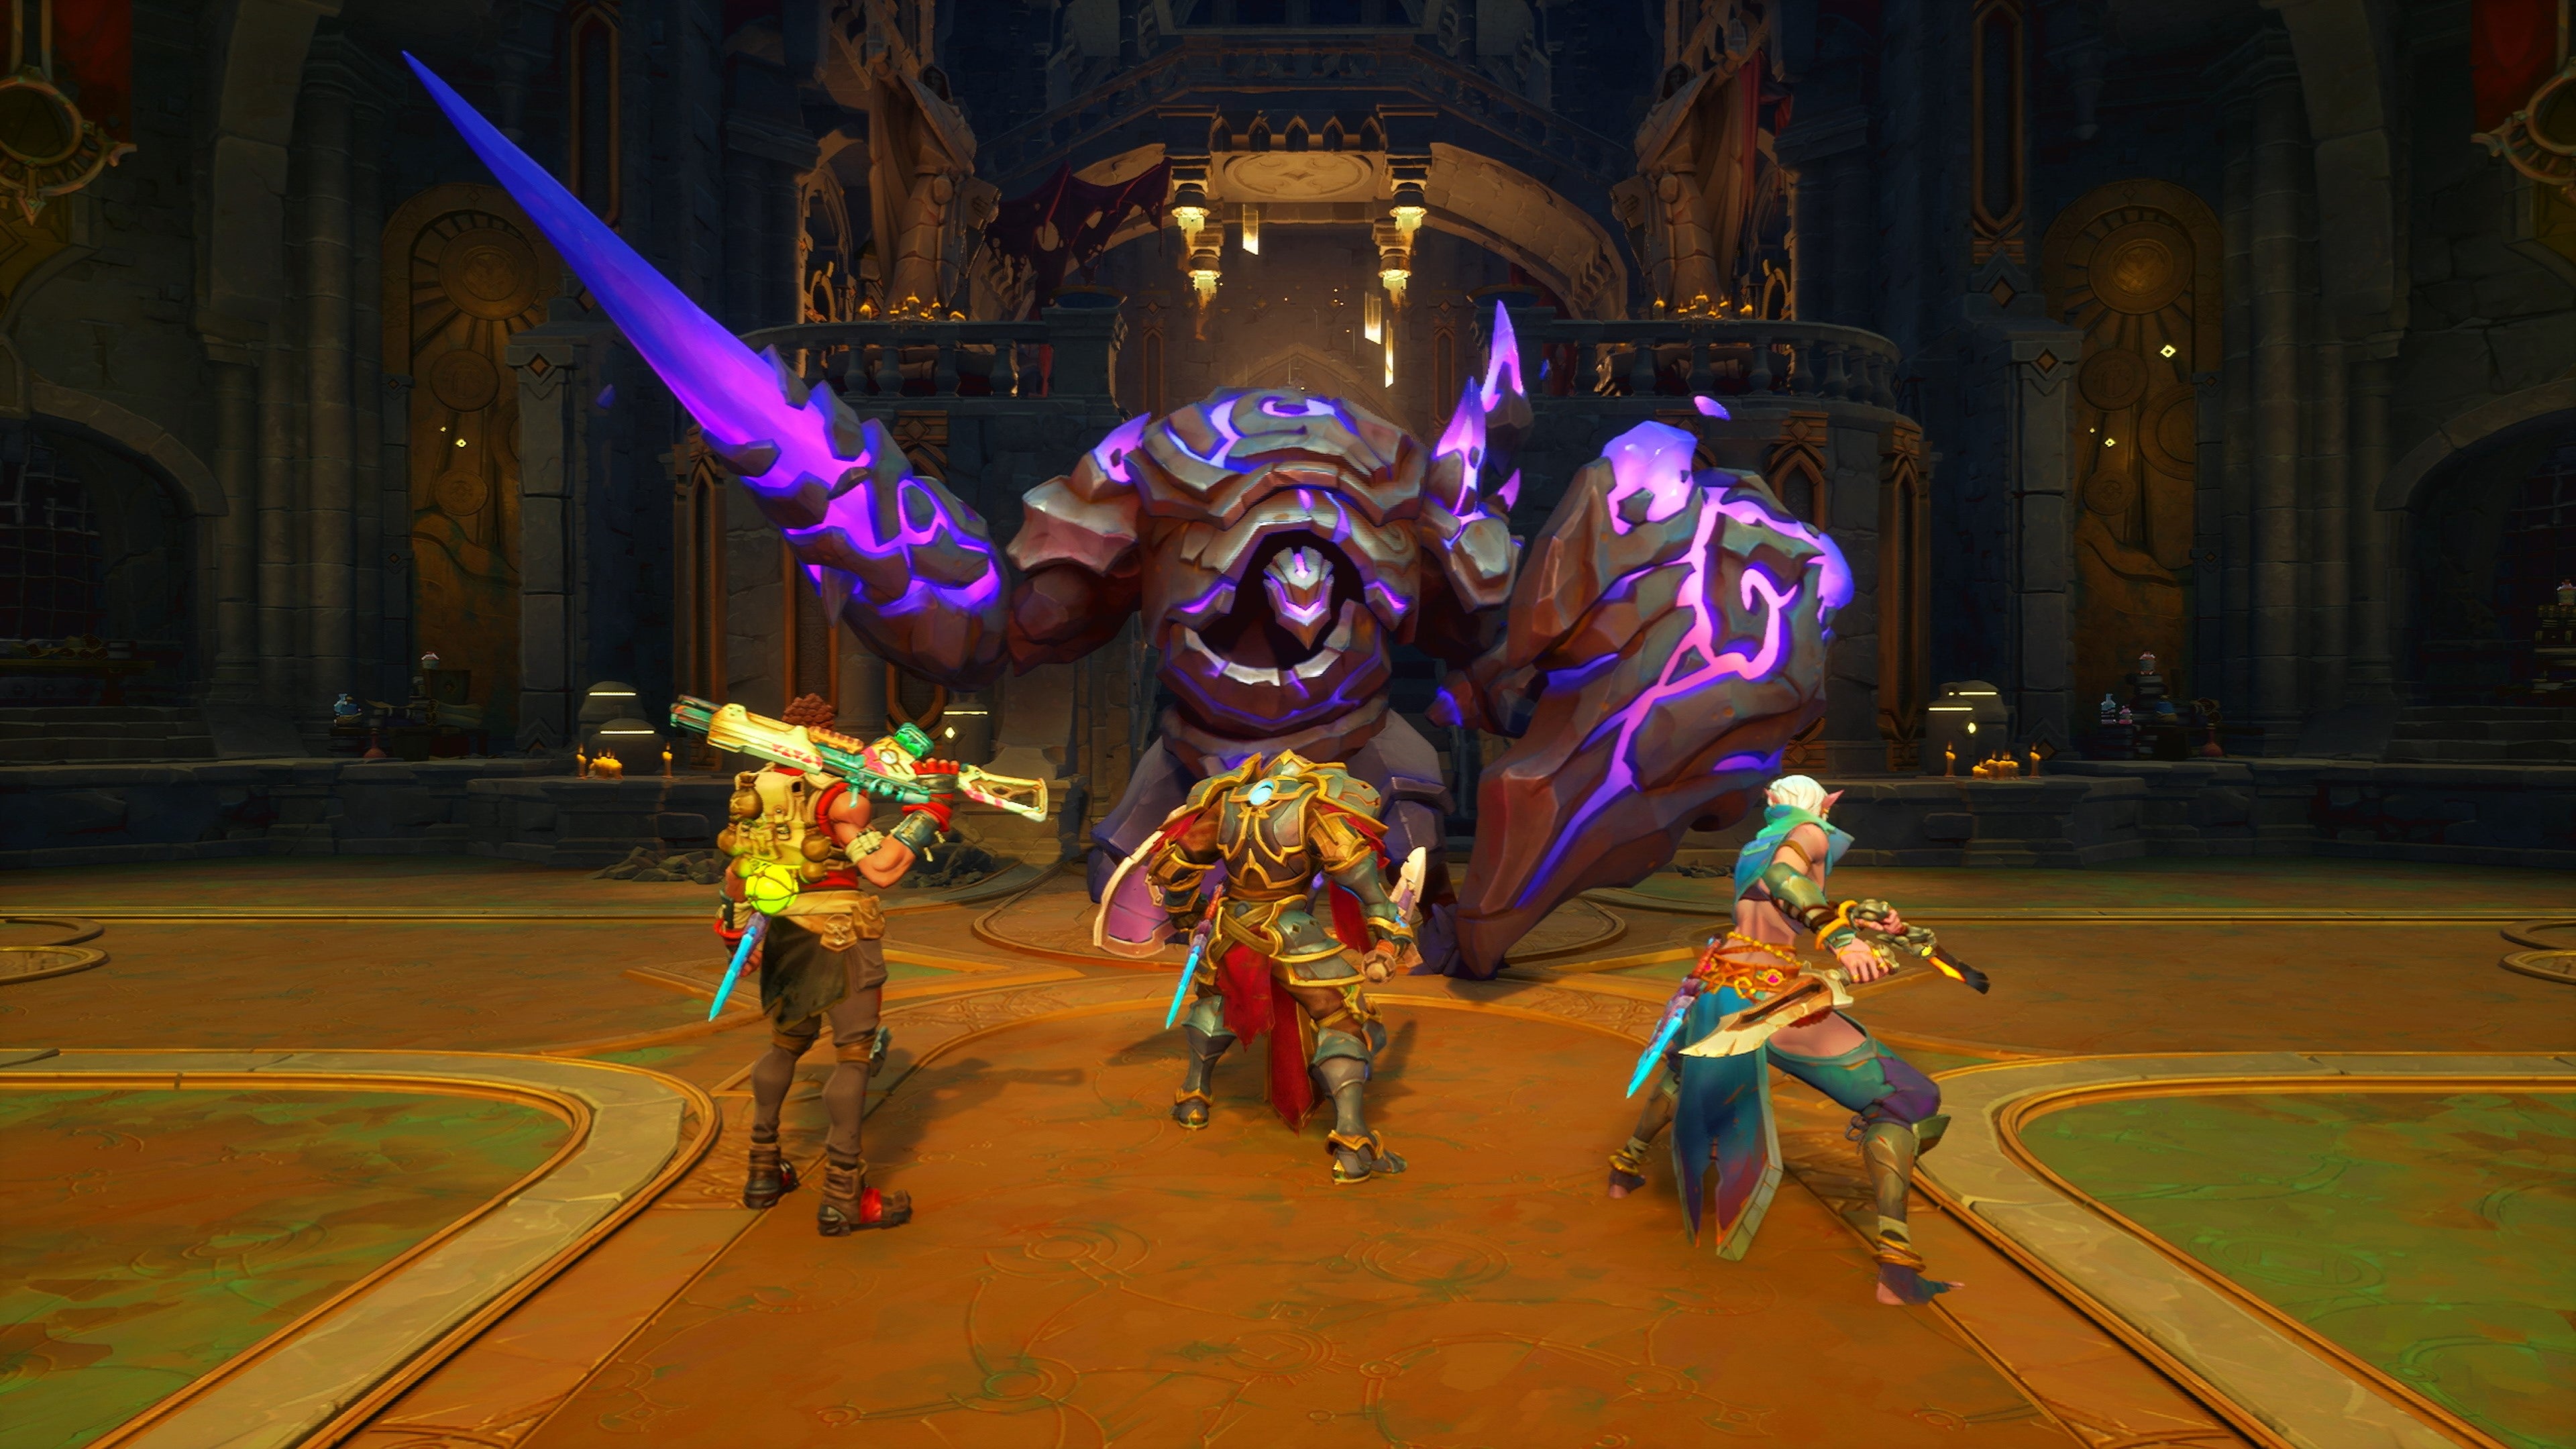 The three heroes battle a glowing purple golem warrior in the Wayfinder.